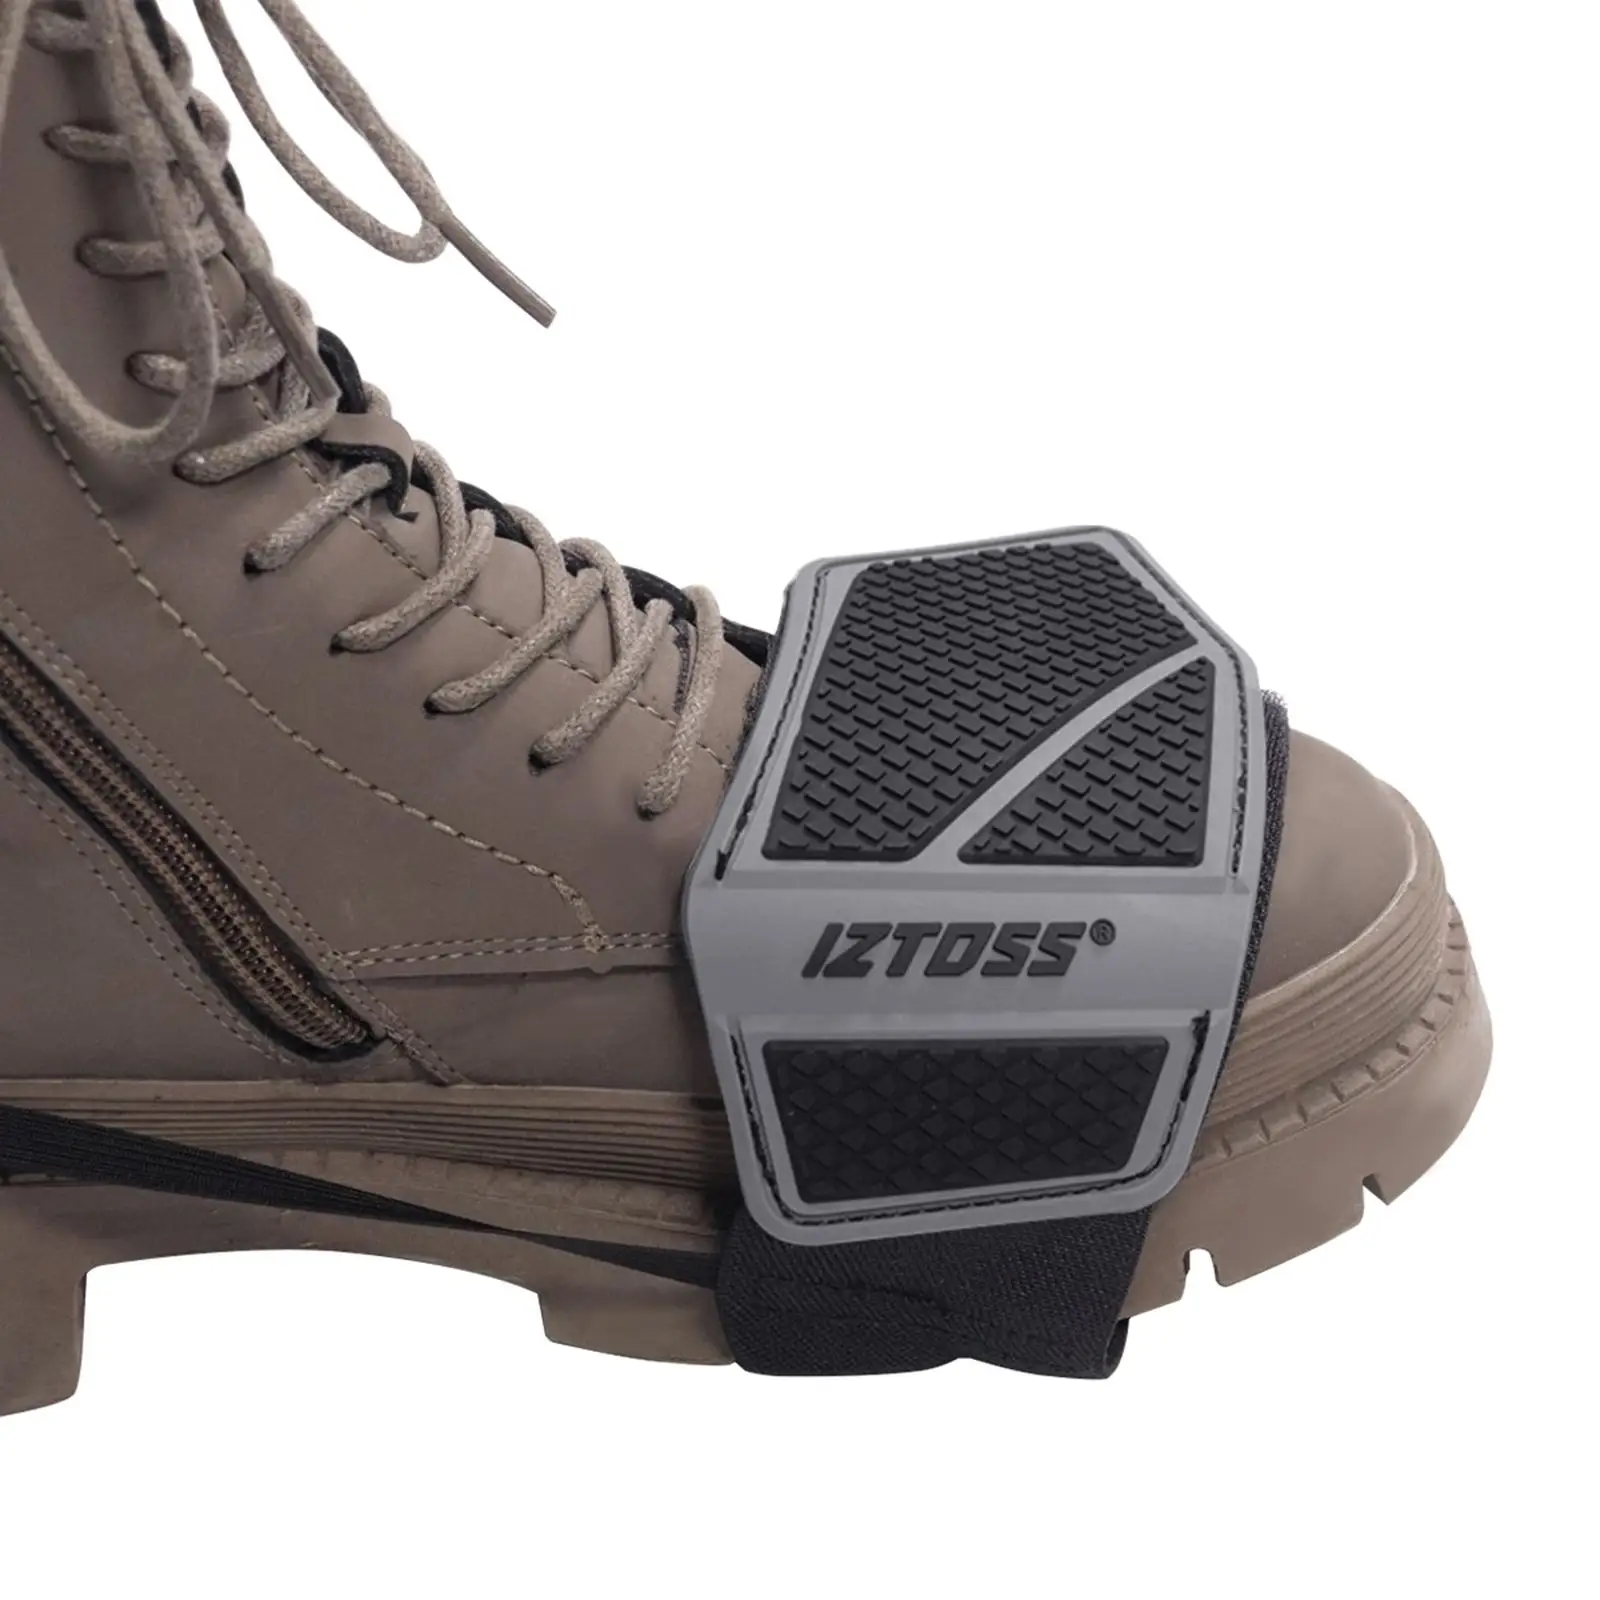 Motorcycle Shoe Protector Useful Anti-Skid Rubber Gear Shifter Guard Women Men